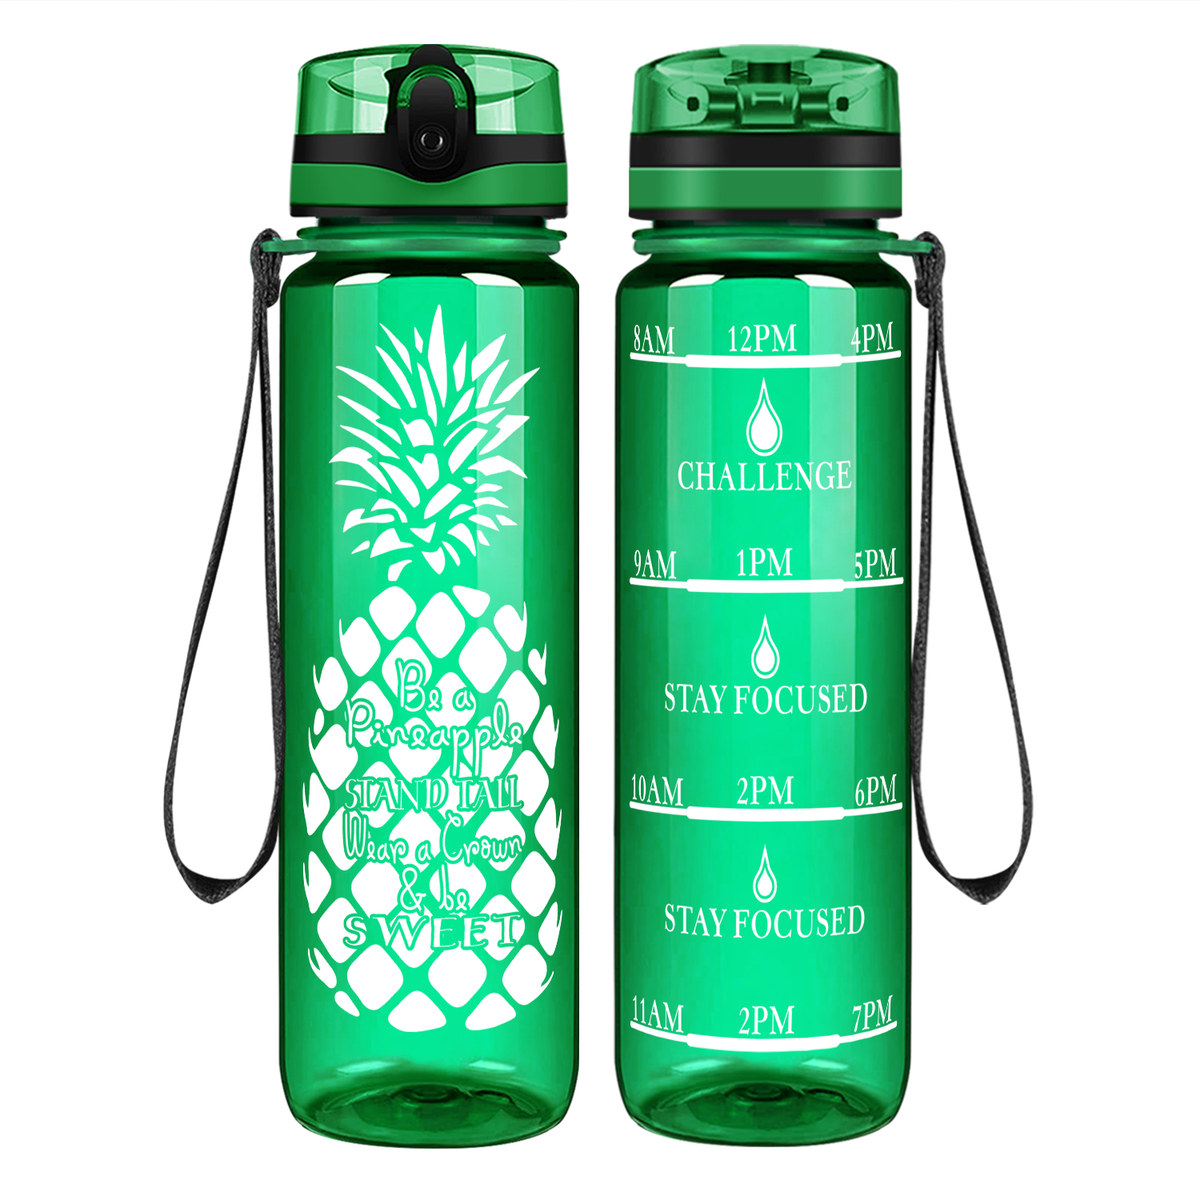 Pineapple Stand Tall Water Bottle Green Gloss